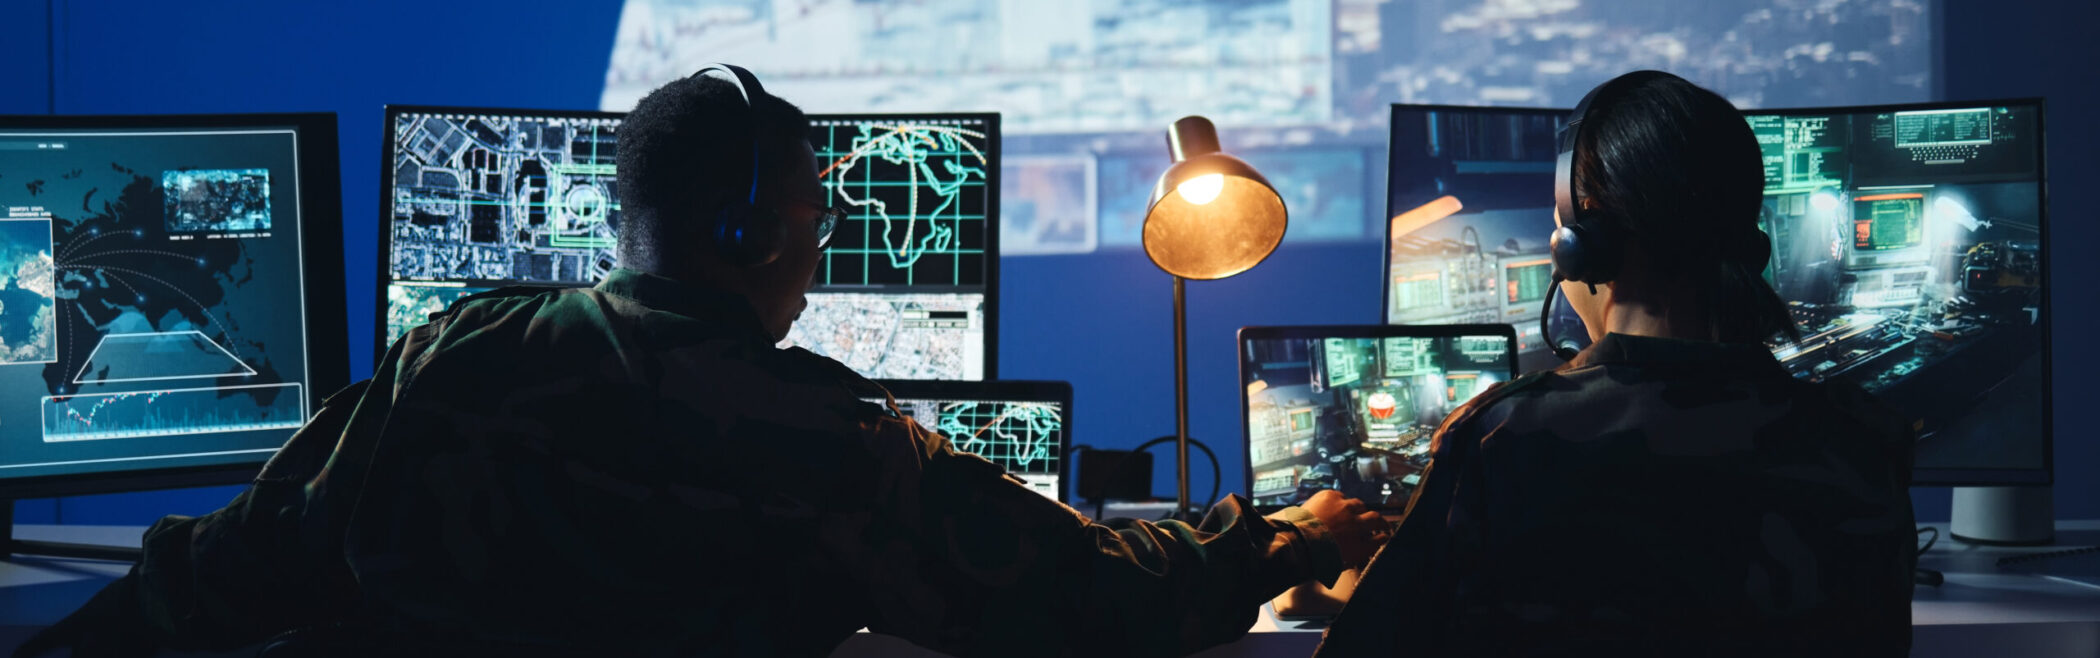 army-control-room-computer-and-team-in-surveillan-2023-09-21-02-58-01-utc-2